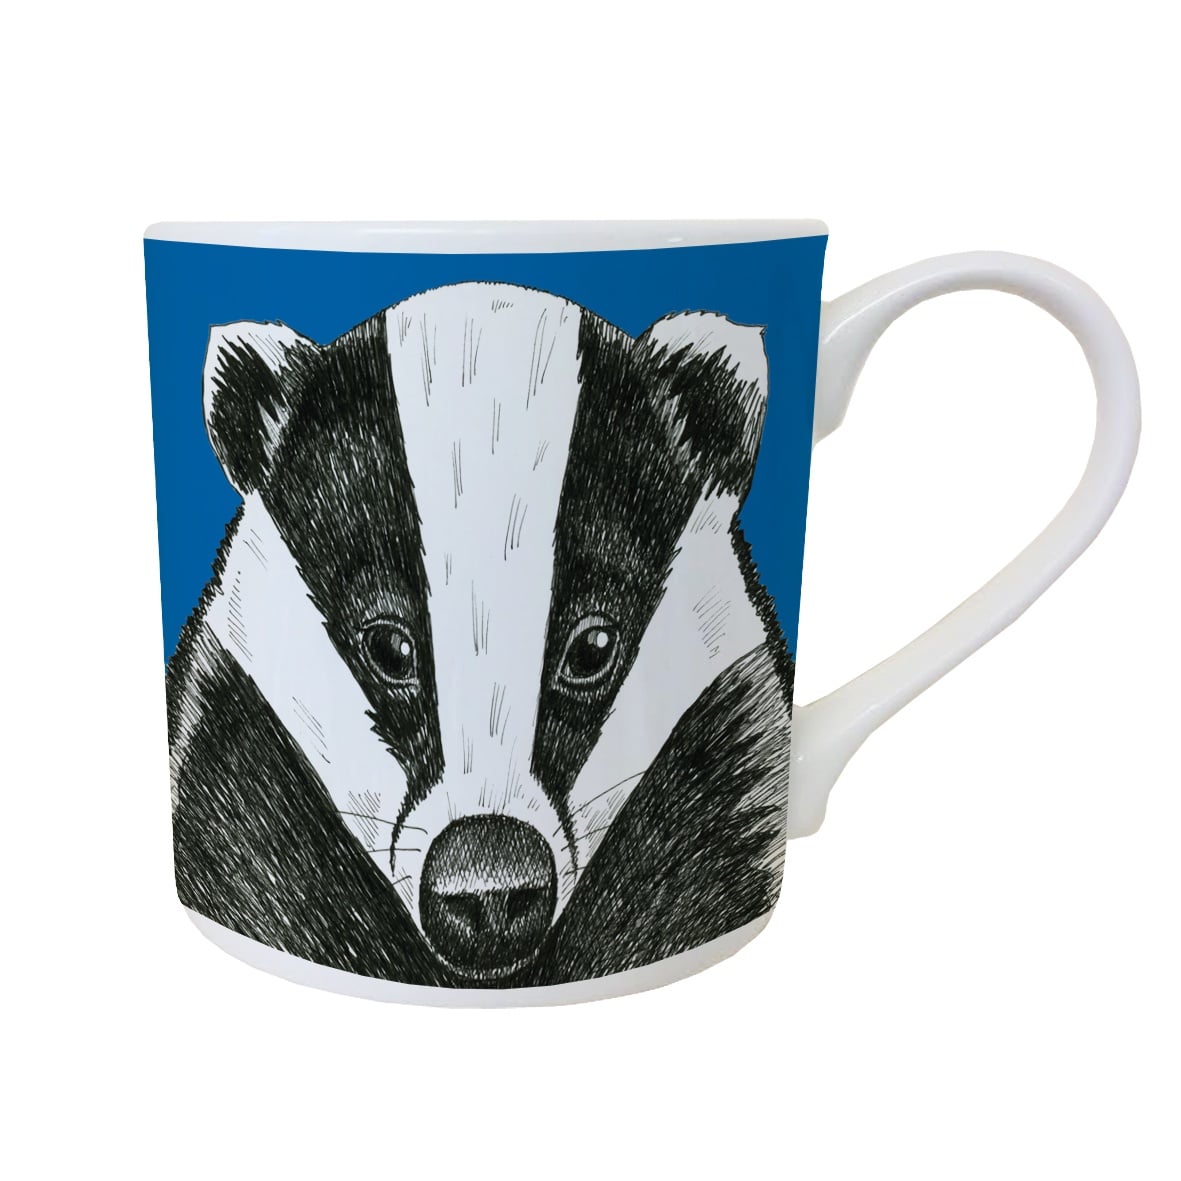 Badger mug